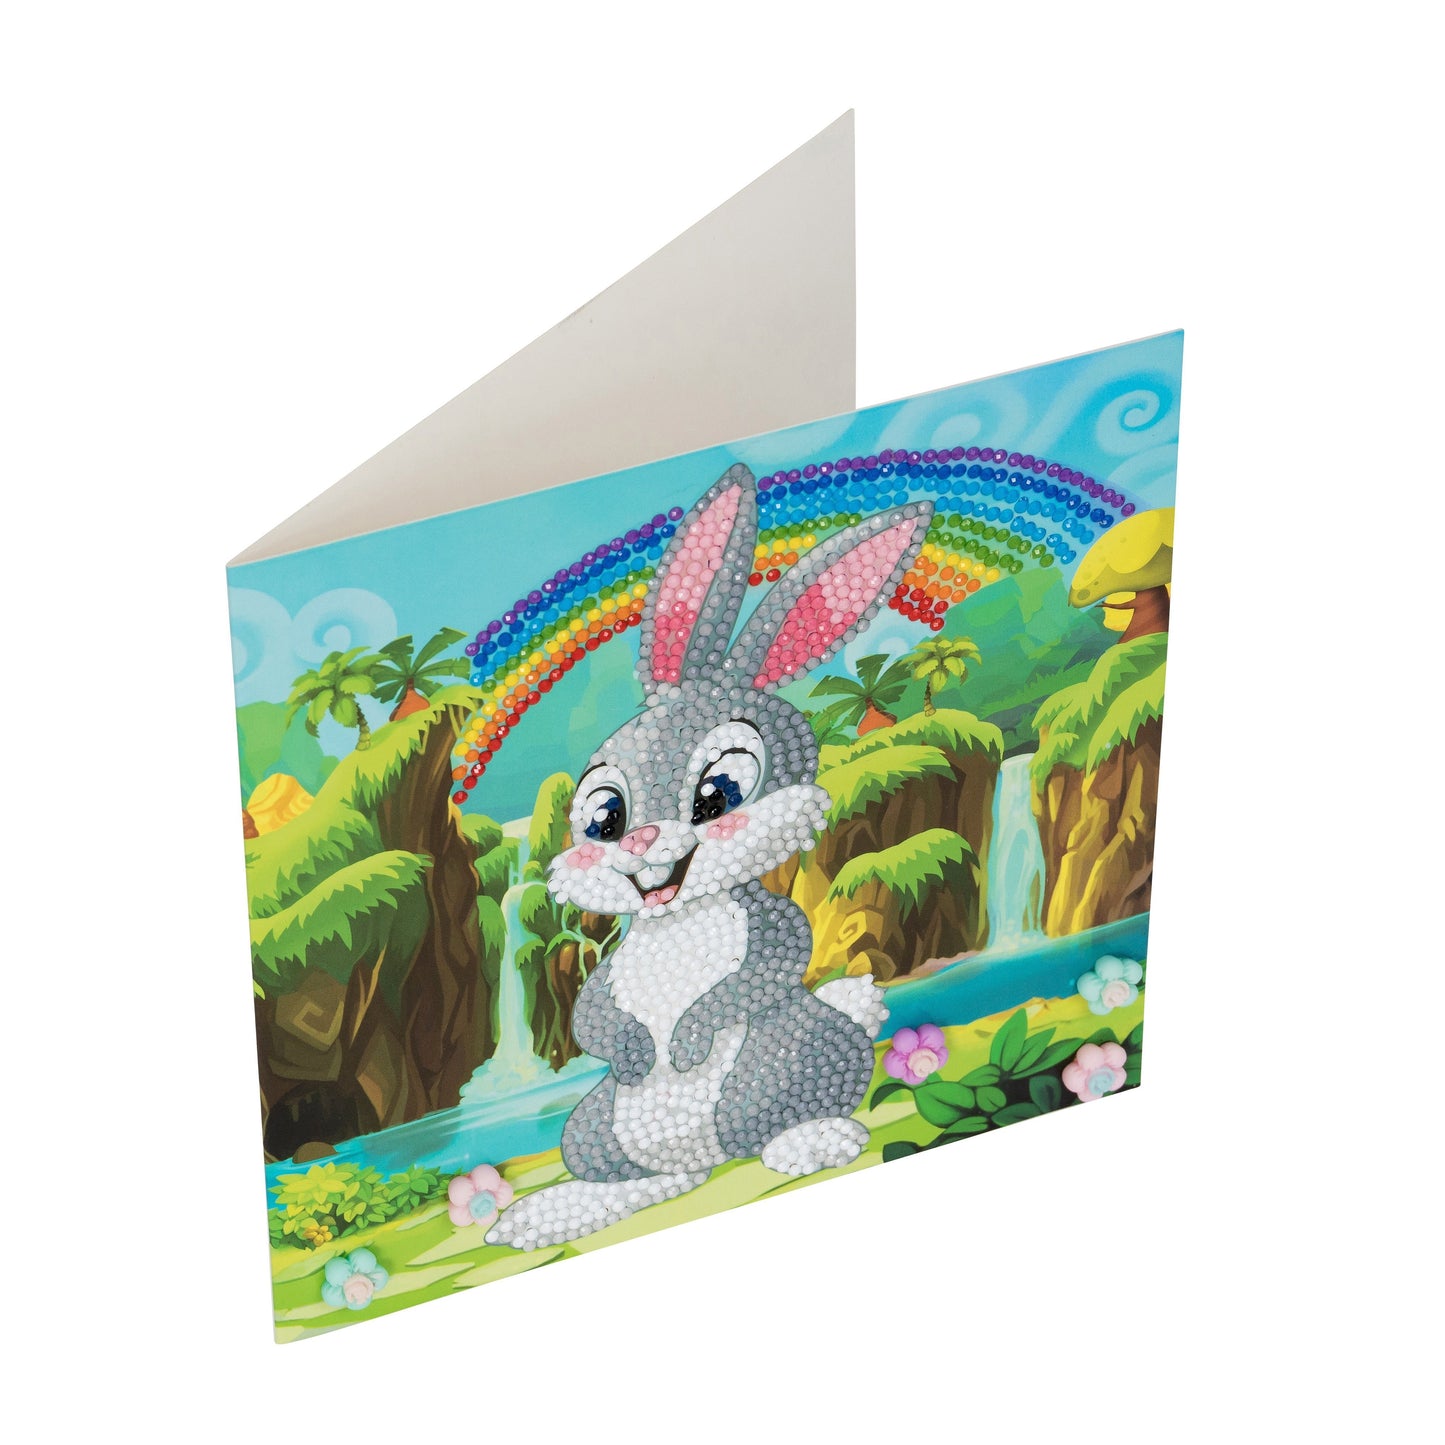 CCK-A24: "Rabbit Wonderland" Crystal Card Kit